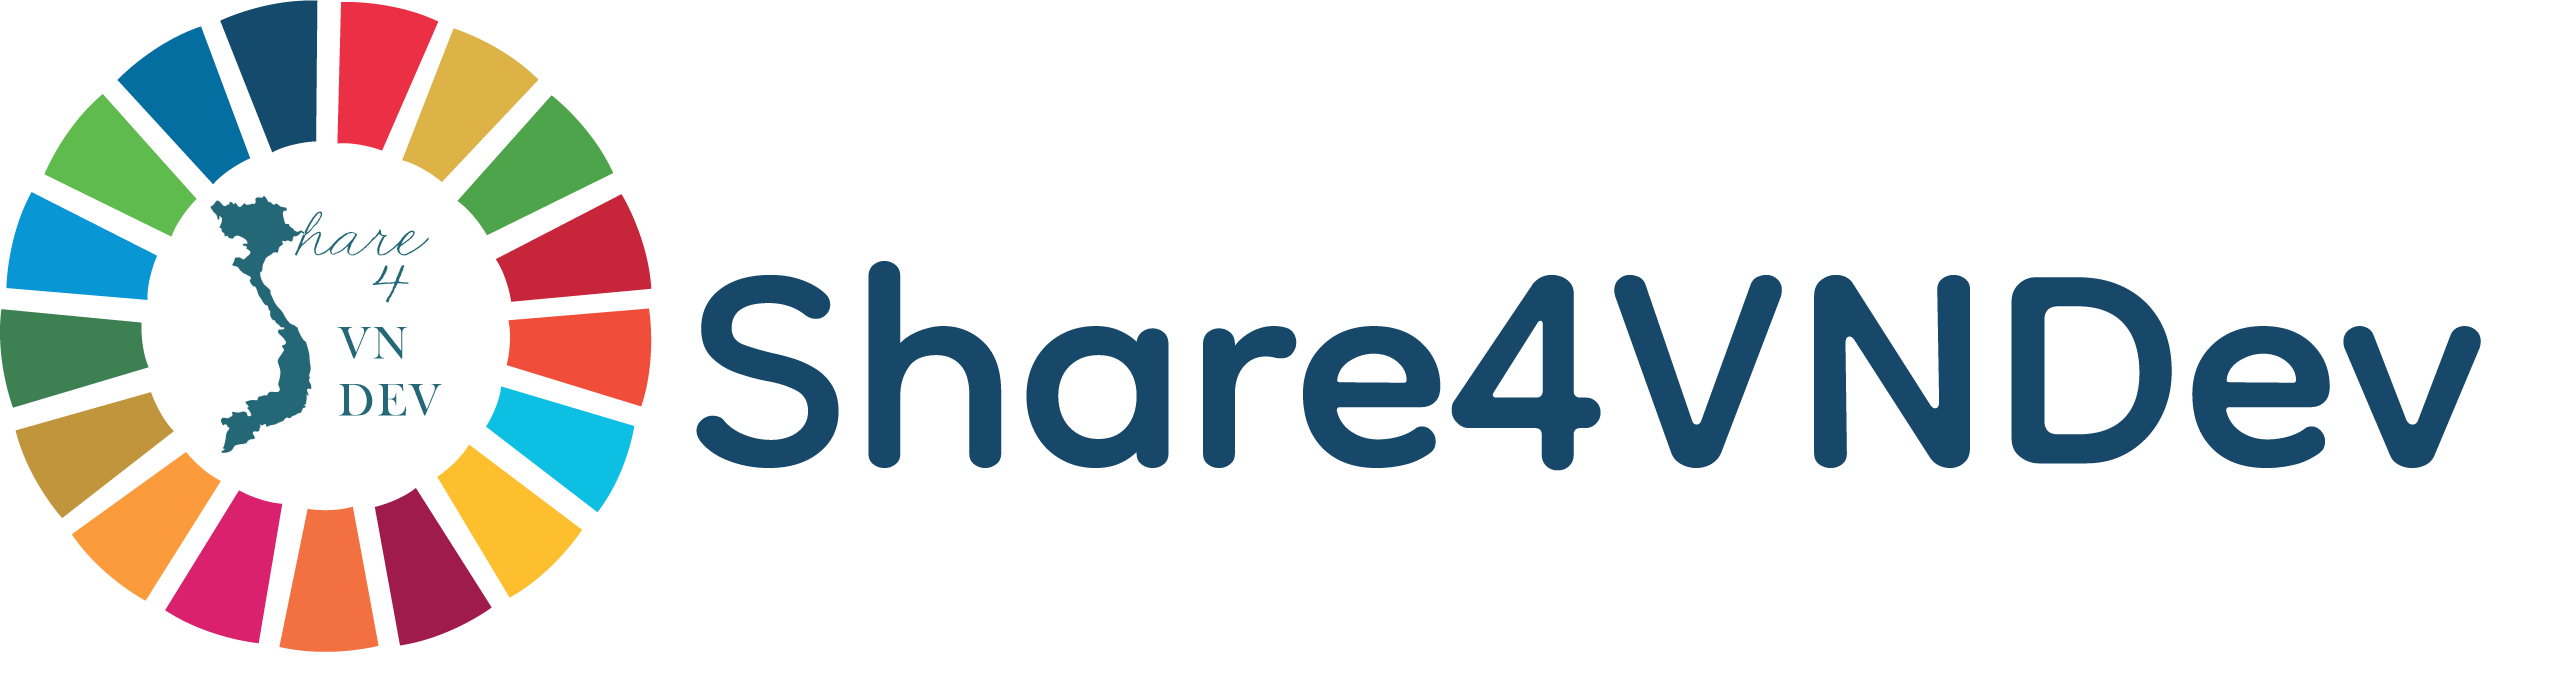 Share4VNDev Logo